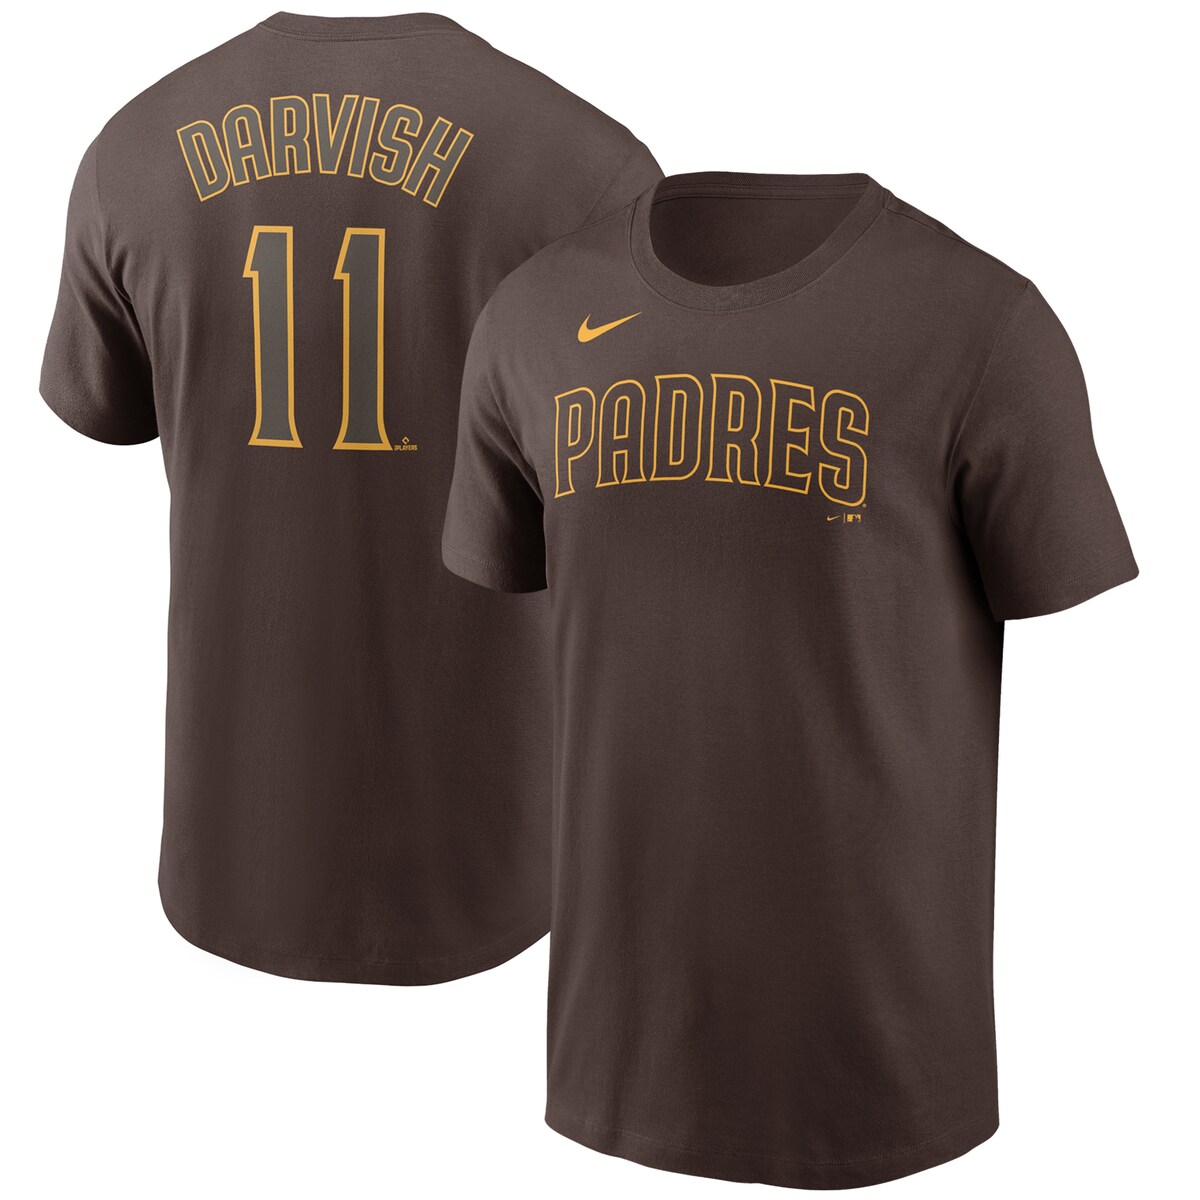 MLB パドレス ダルビッシュ有 Tシャツ Nike ナイキ メンズ ブラウン (Men 039 s MLB Nike Name Number T-Shirt)